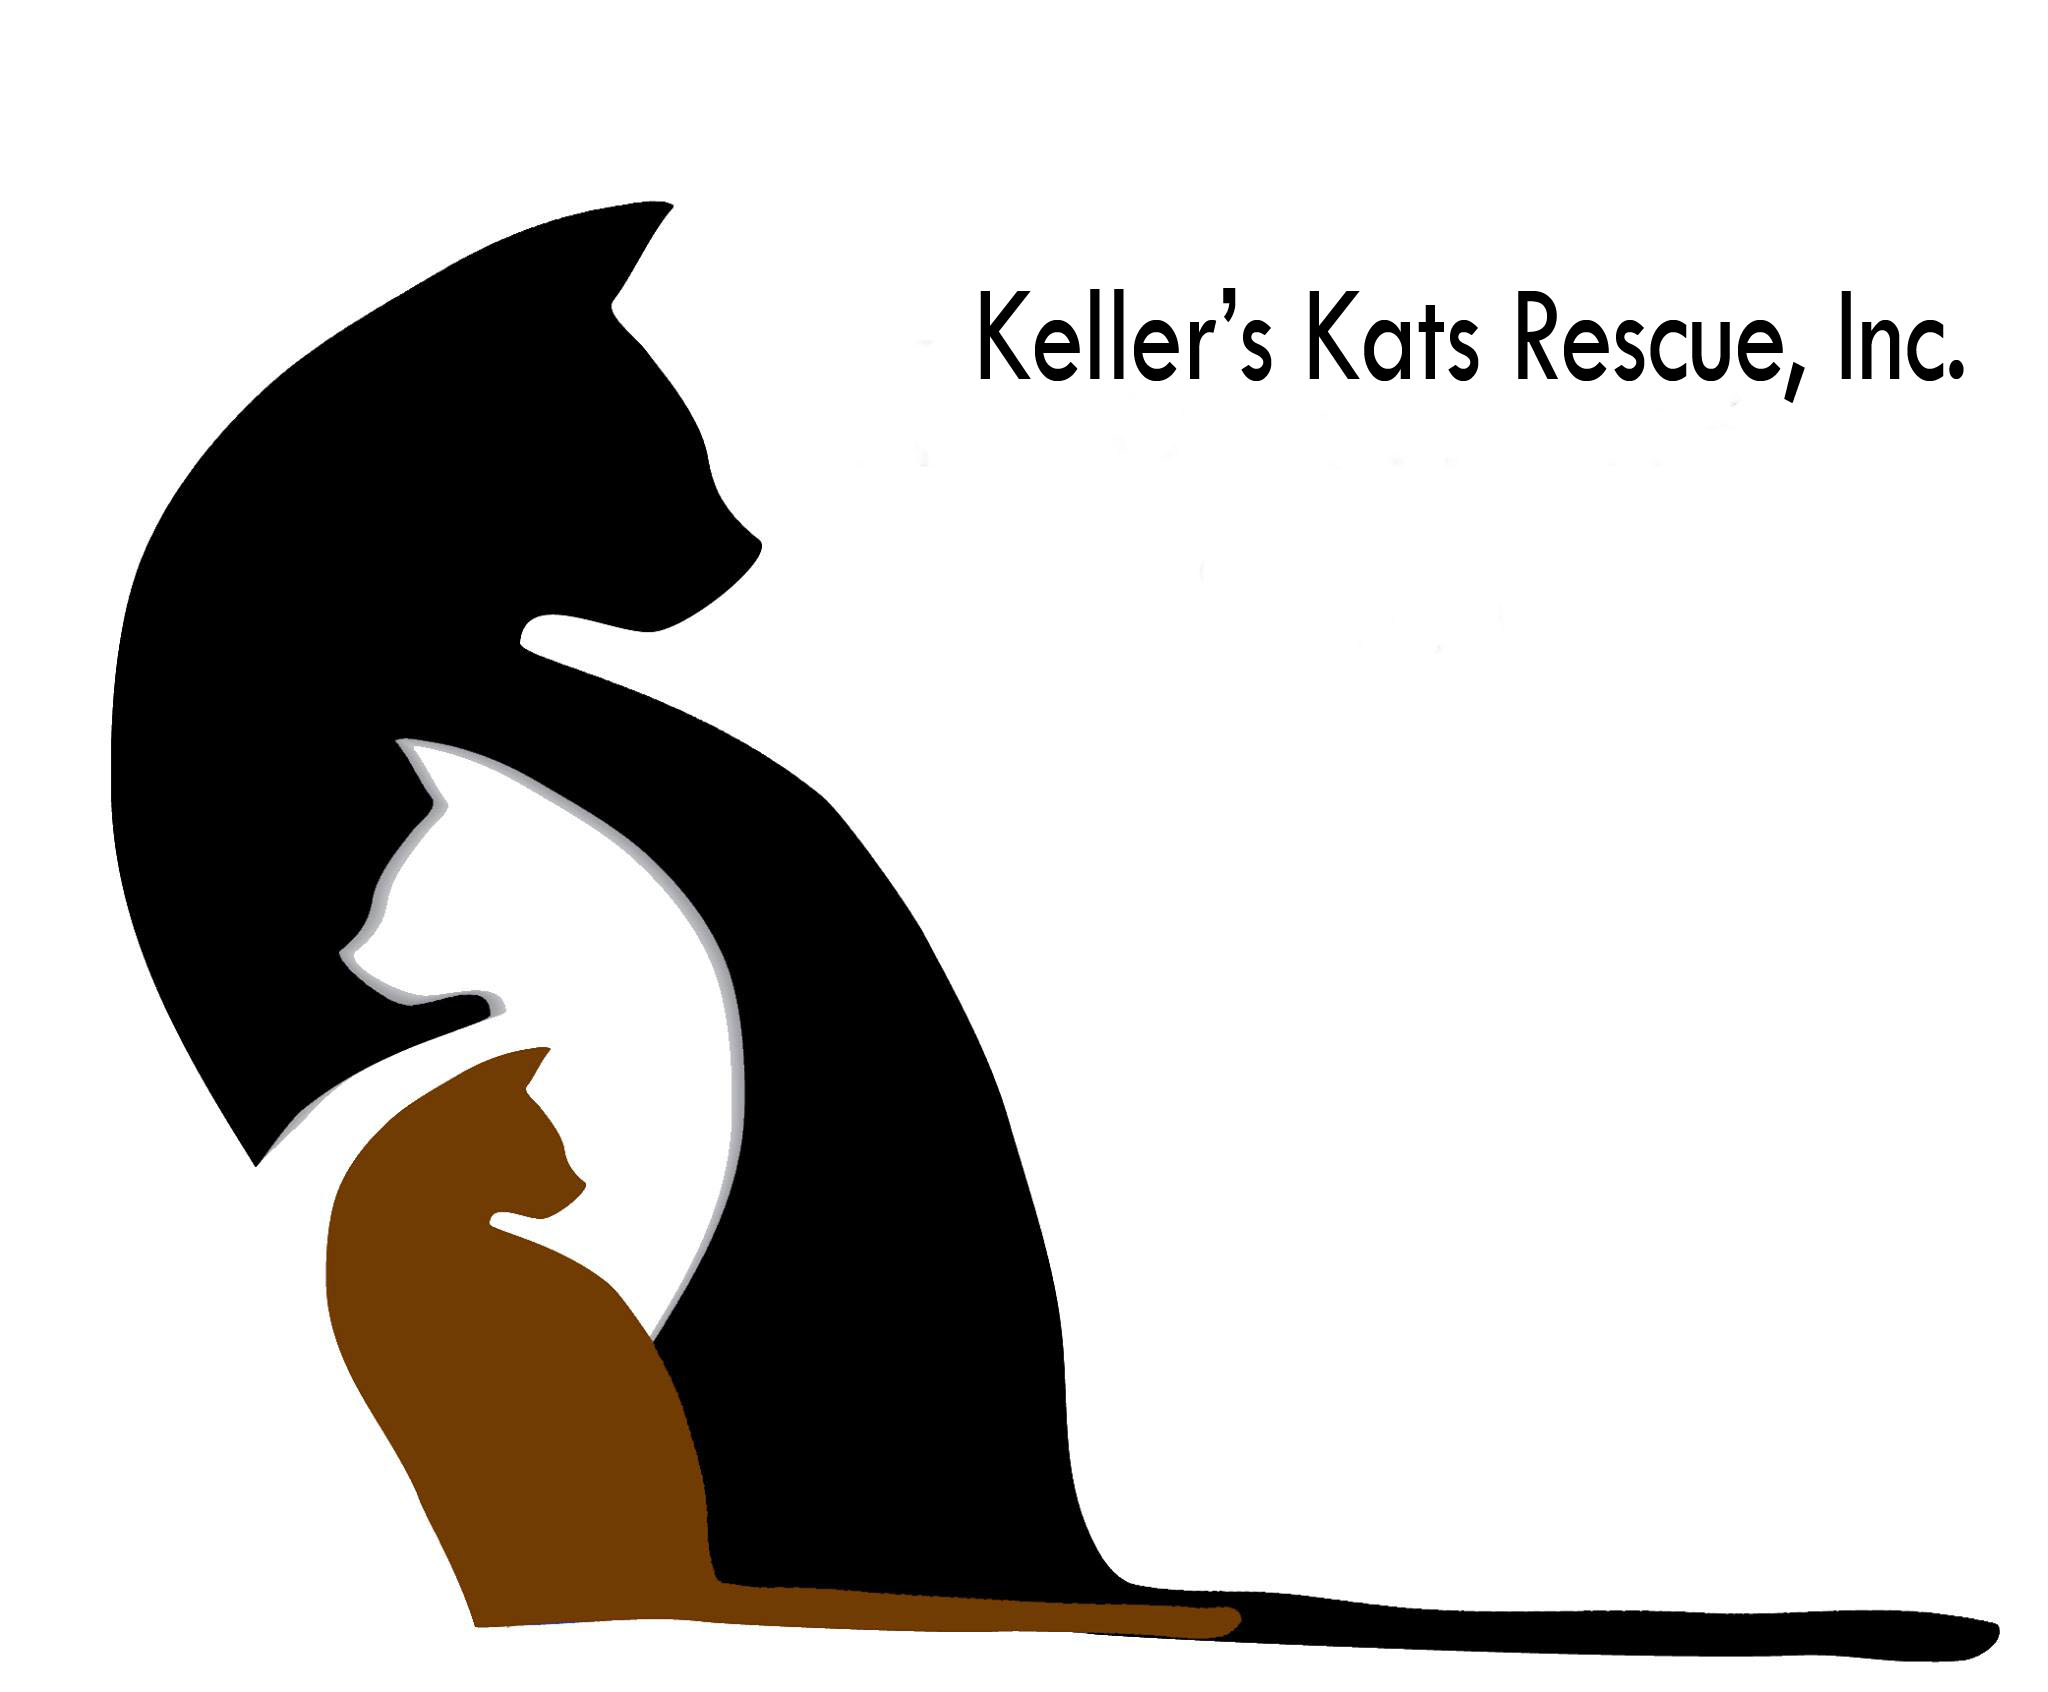 Keller's Kats Rescue